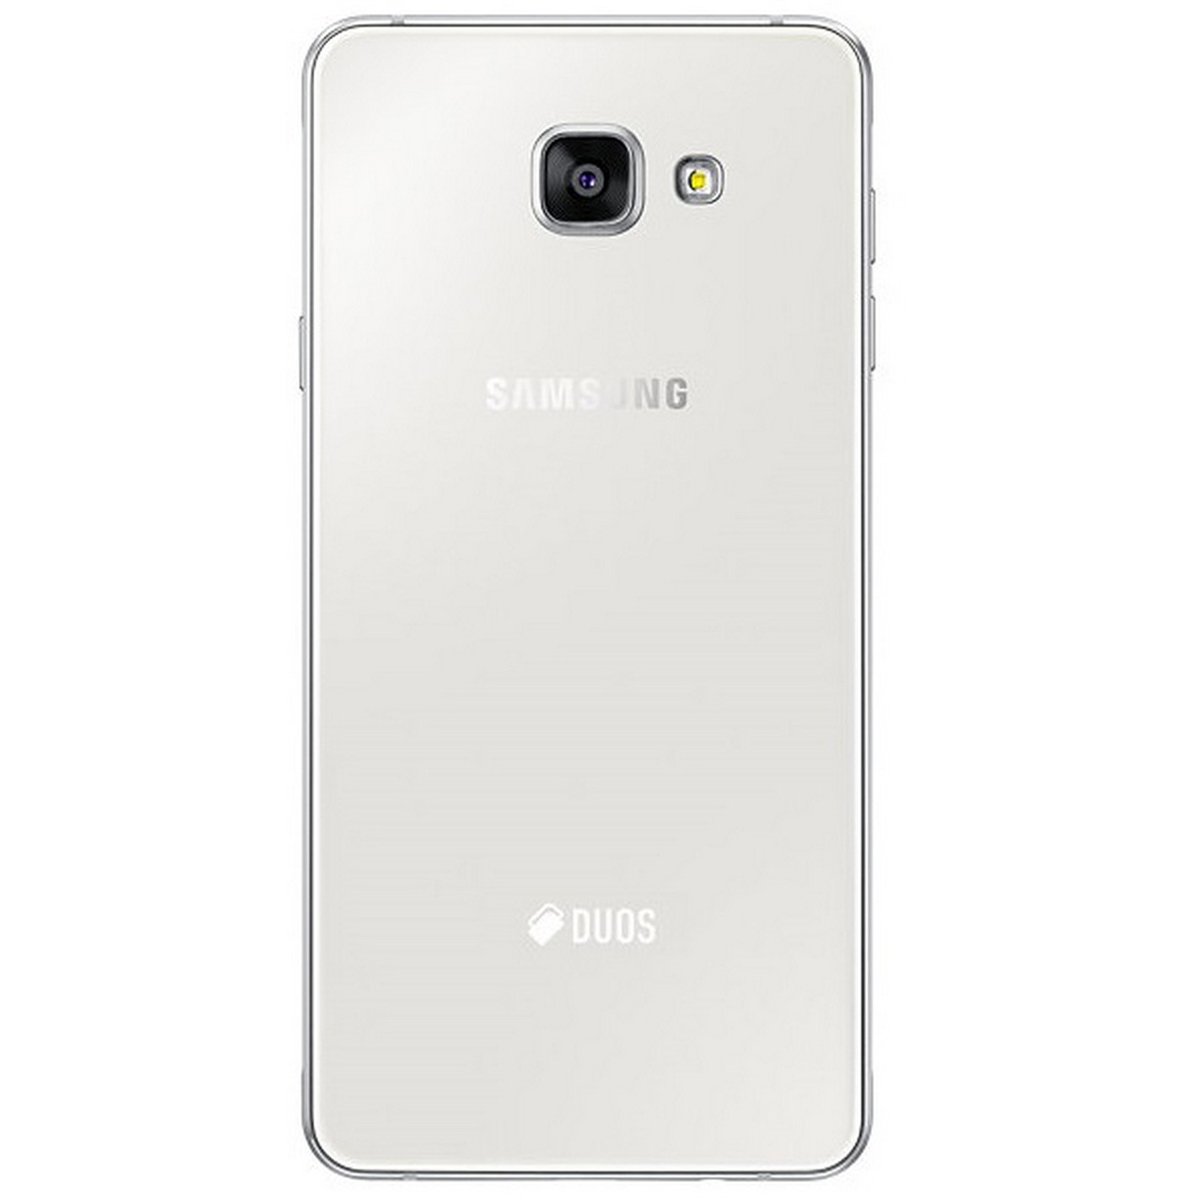 Samsung Galaxy A7 (2016) SMA710 16GB LTE White